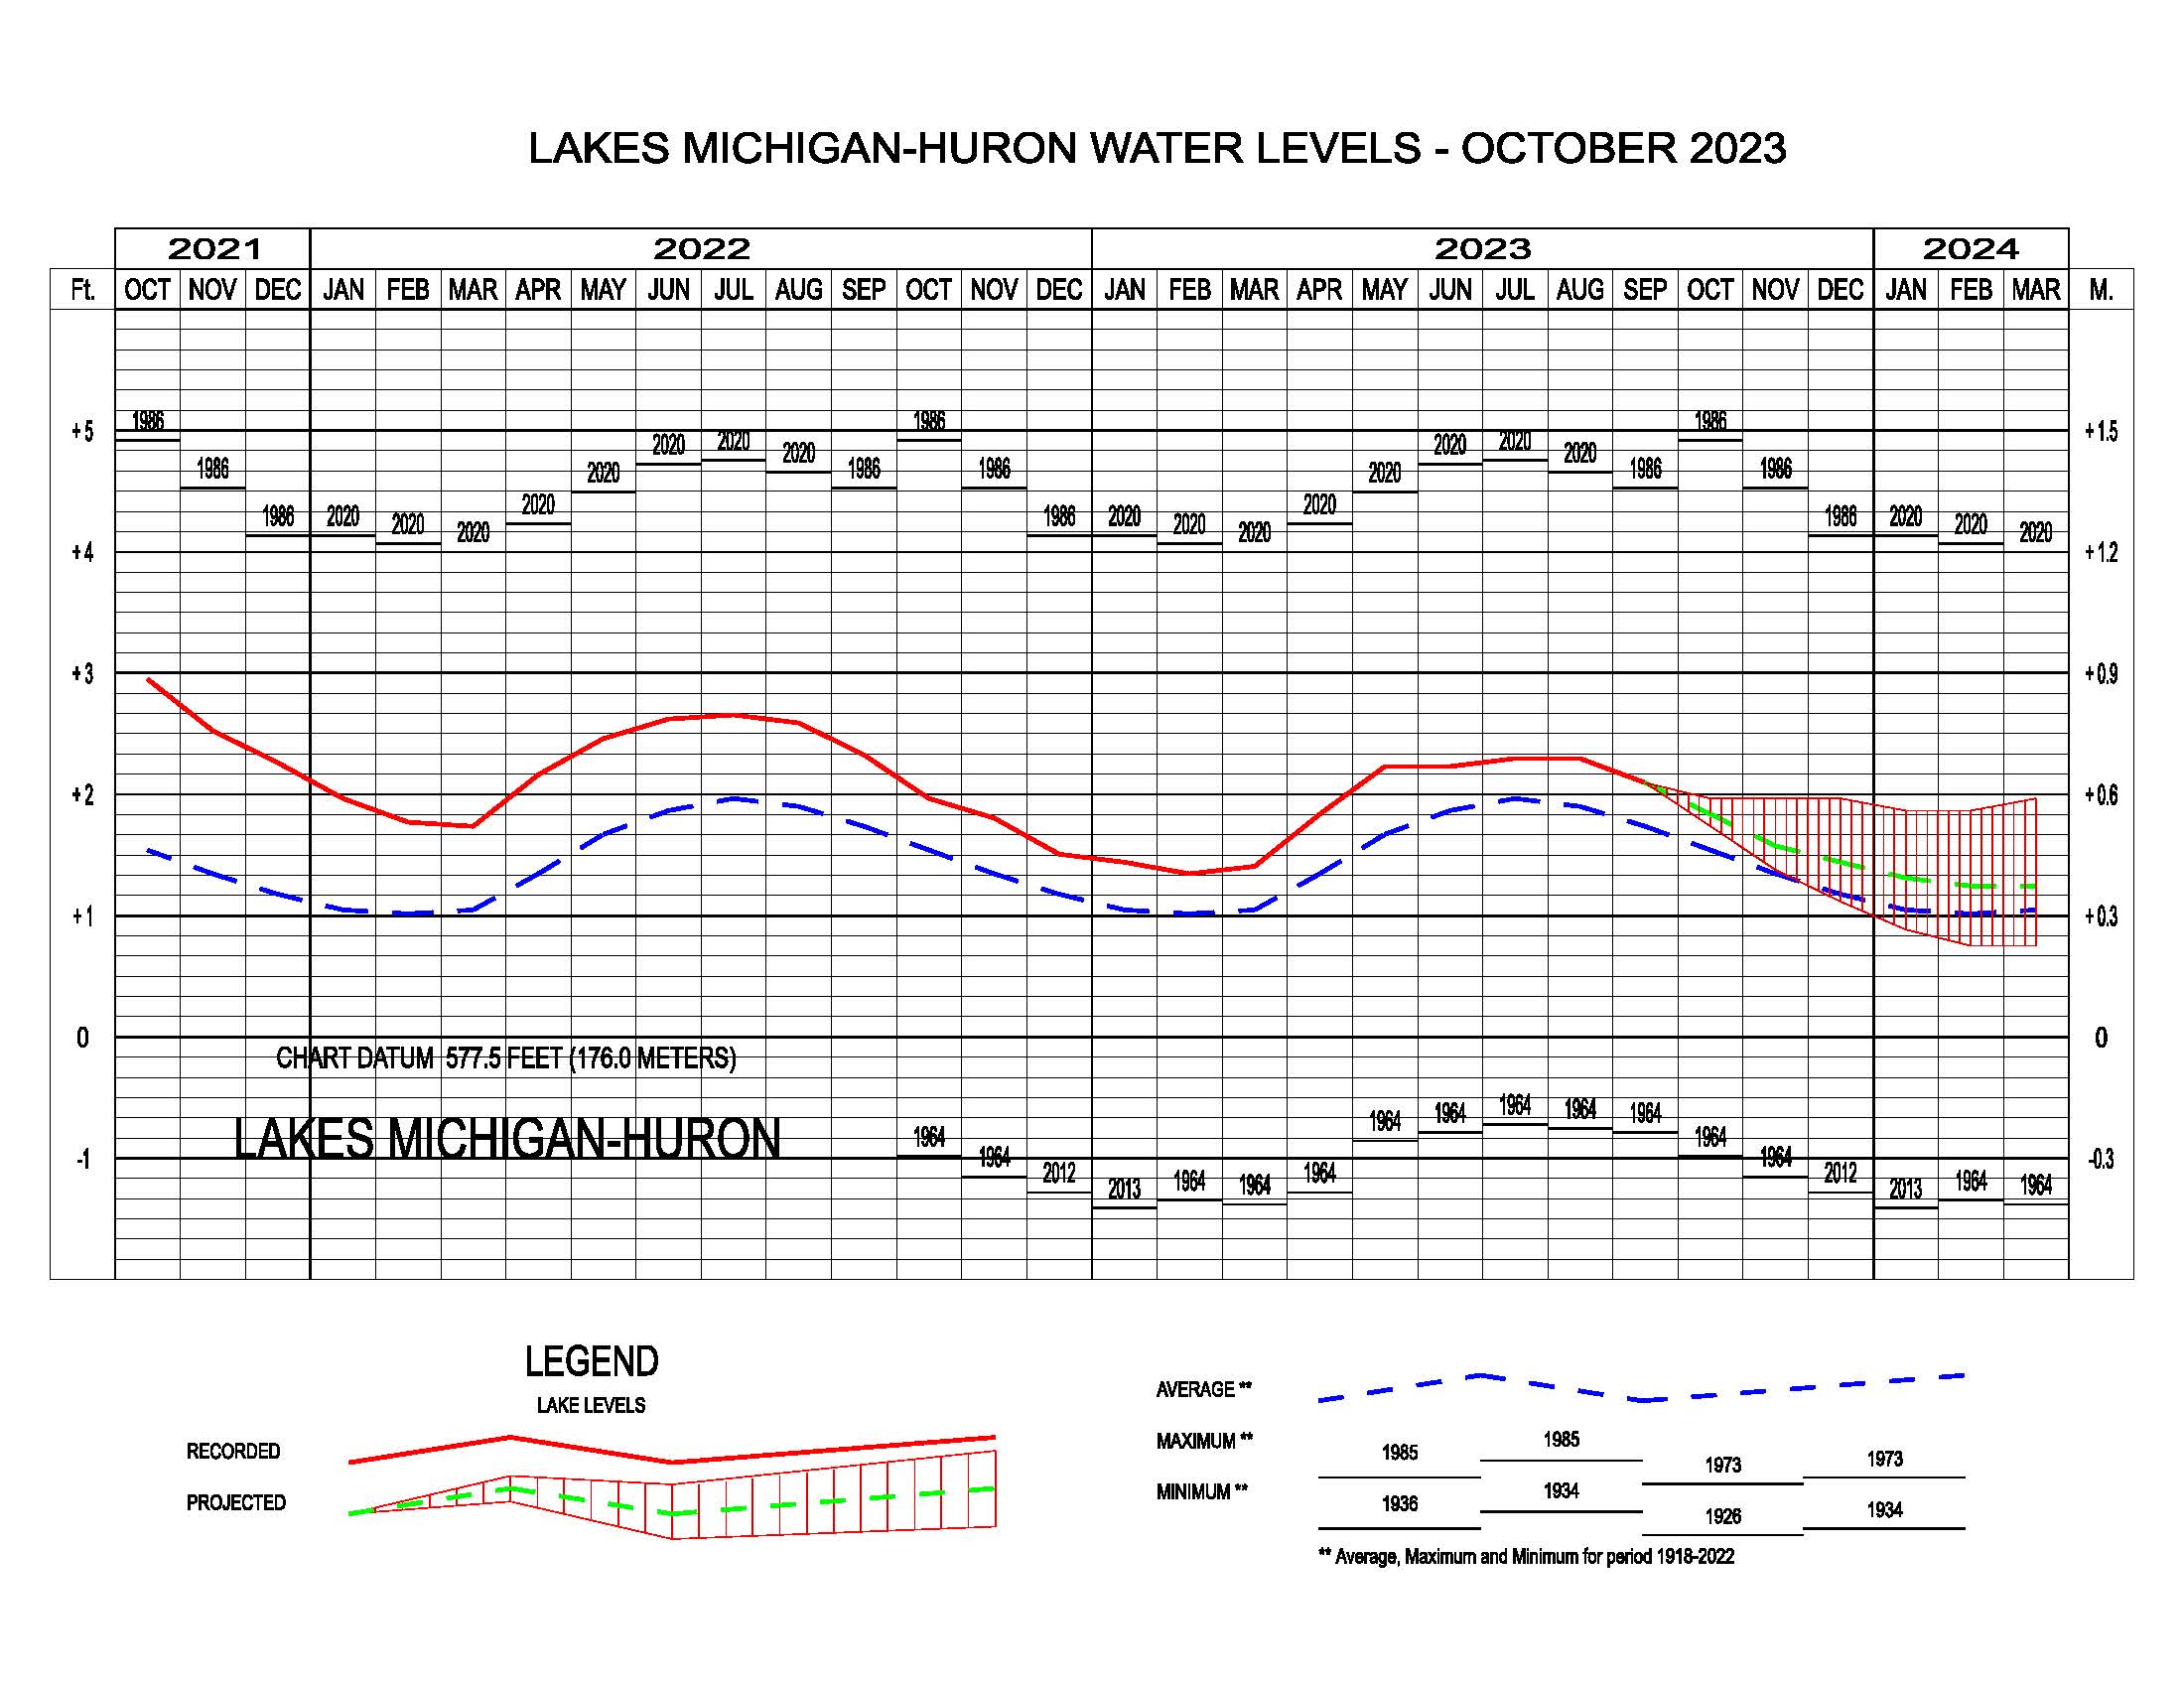 Graph of Lake Michigan Water Levels